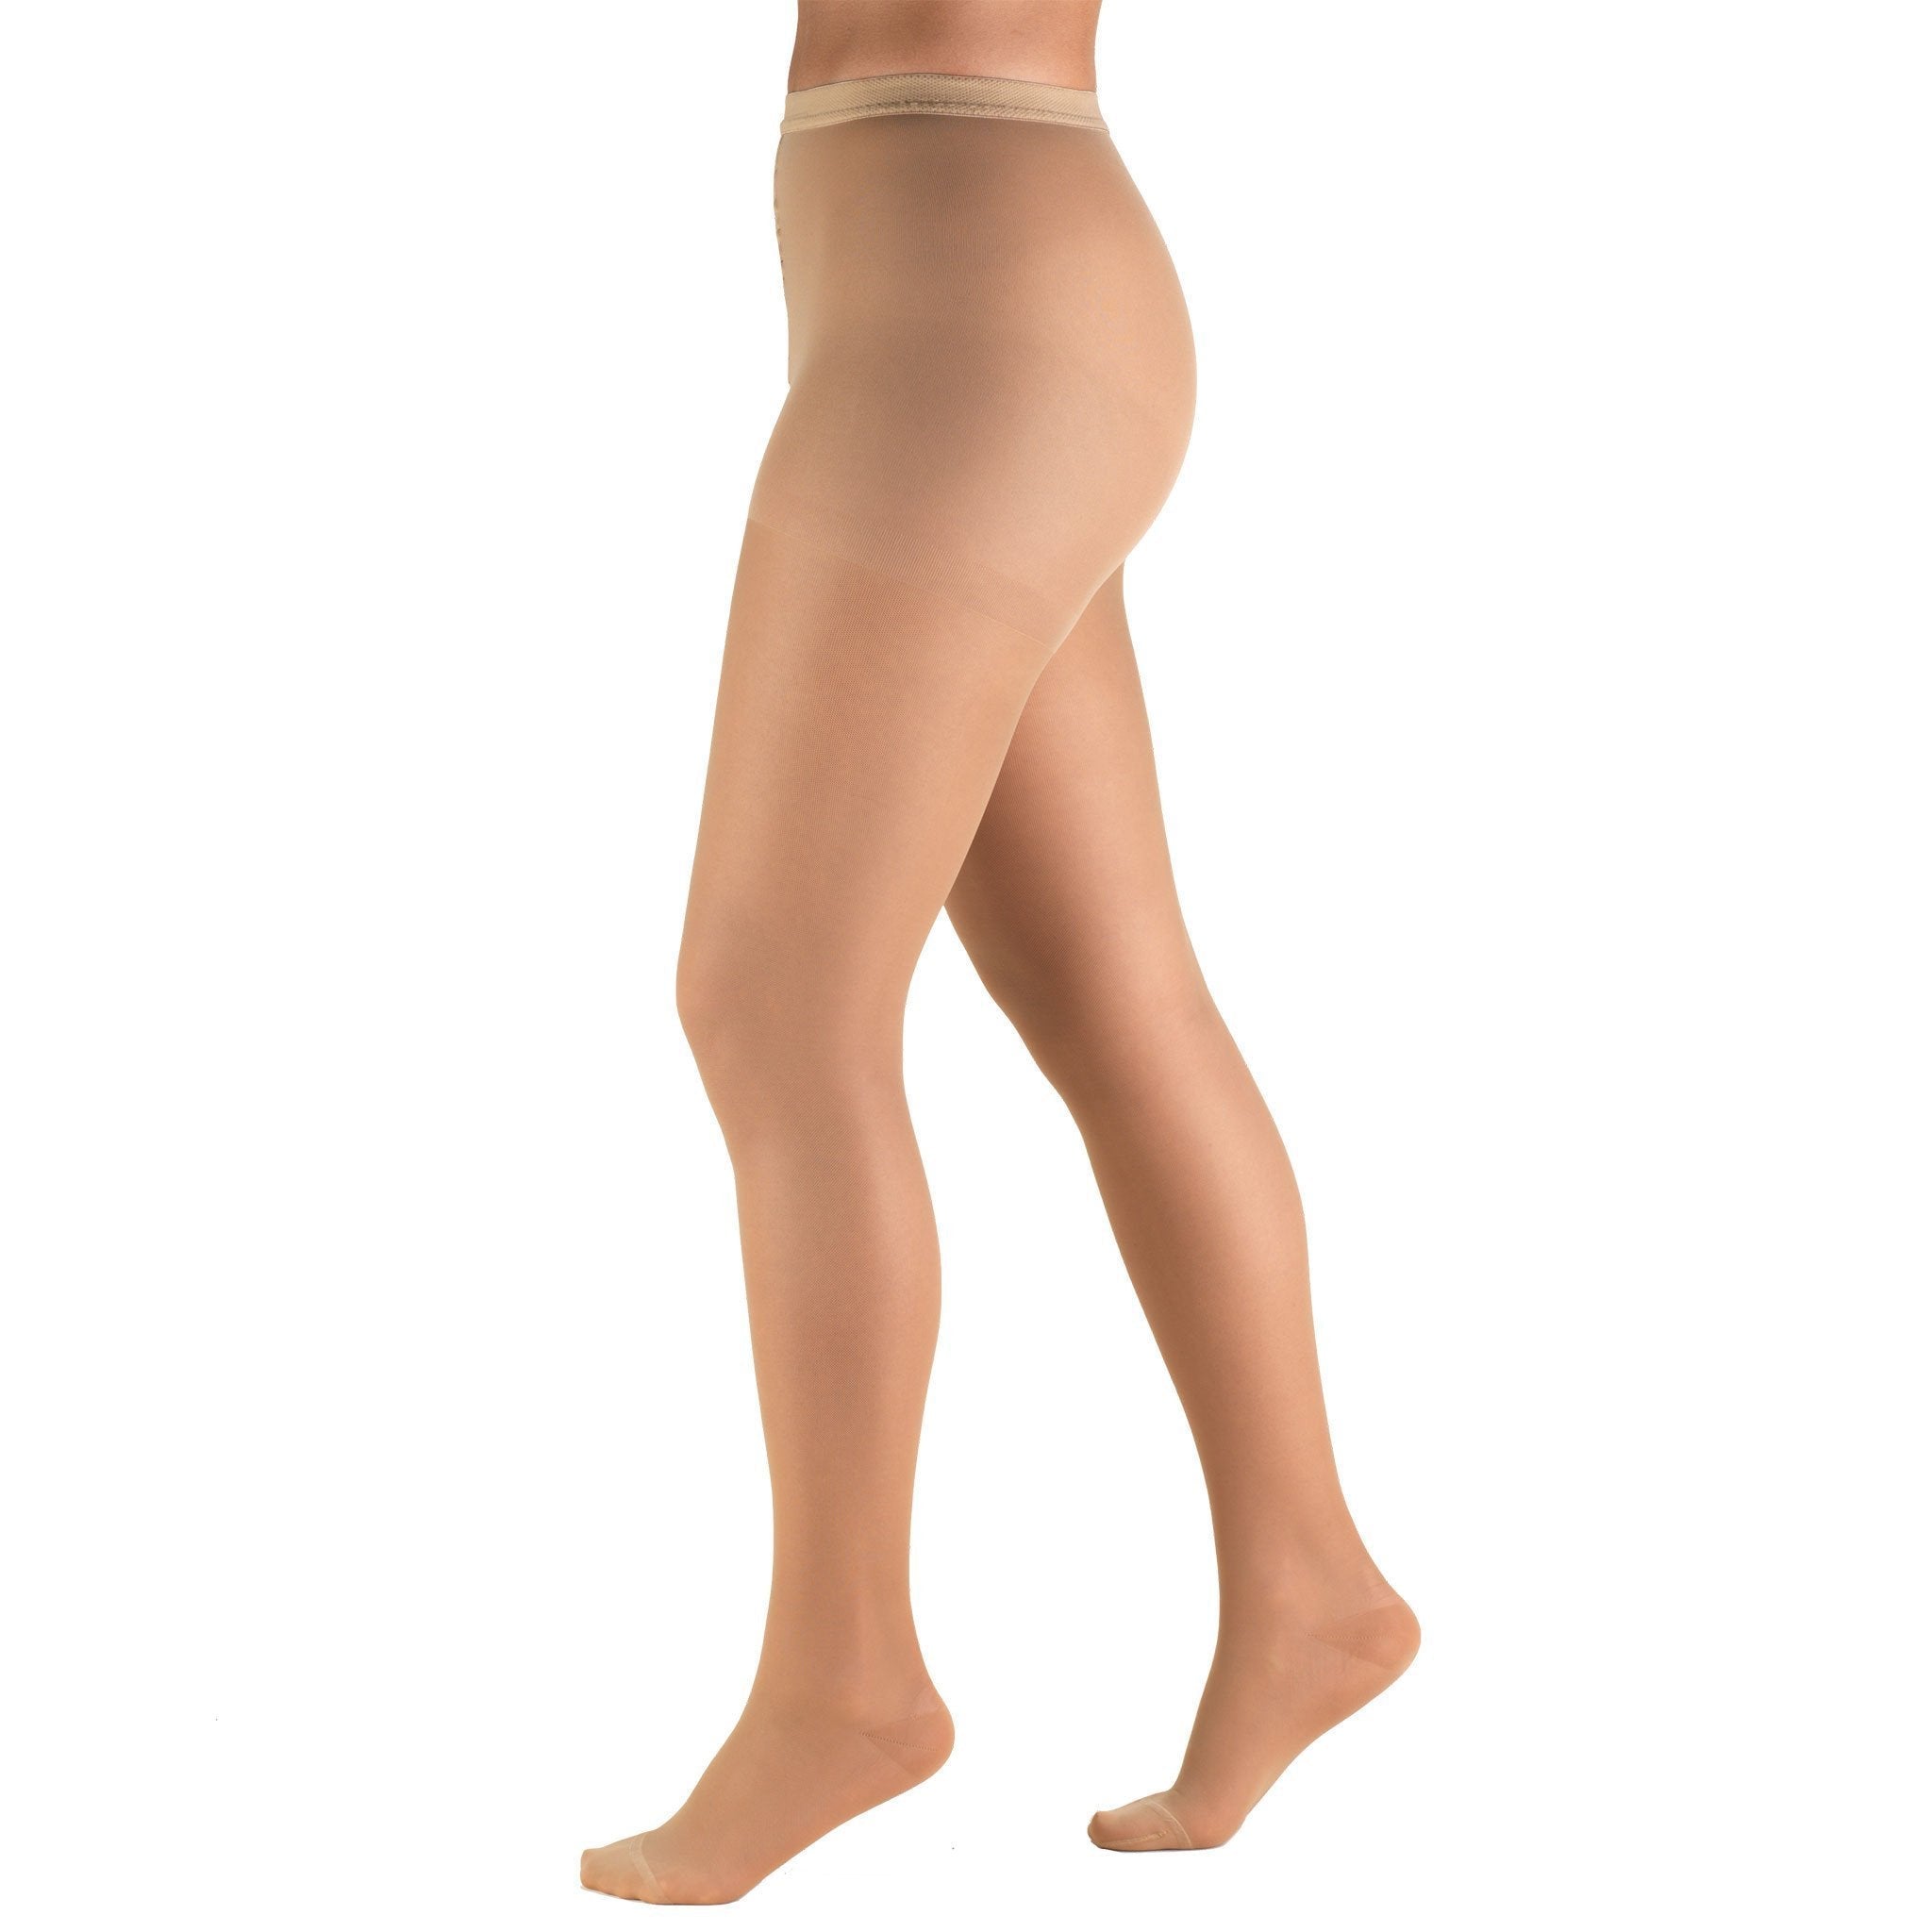 TruForm Ladies' Sheer Thigh High Compression Stockings 20-30mmHg